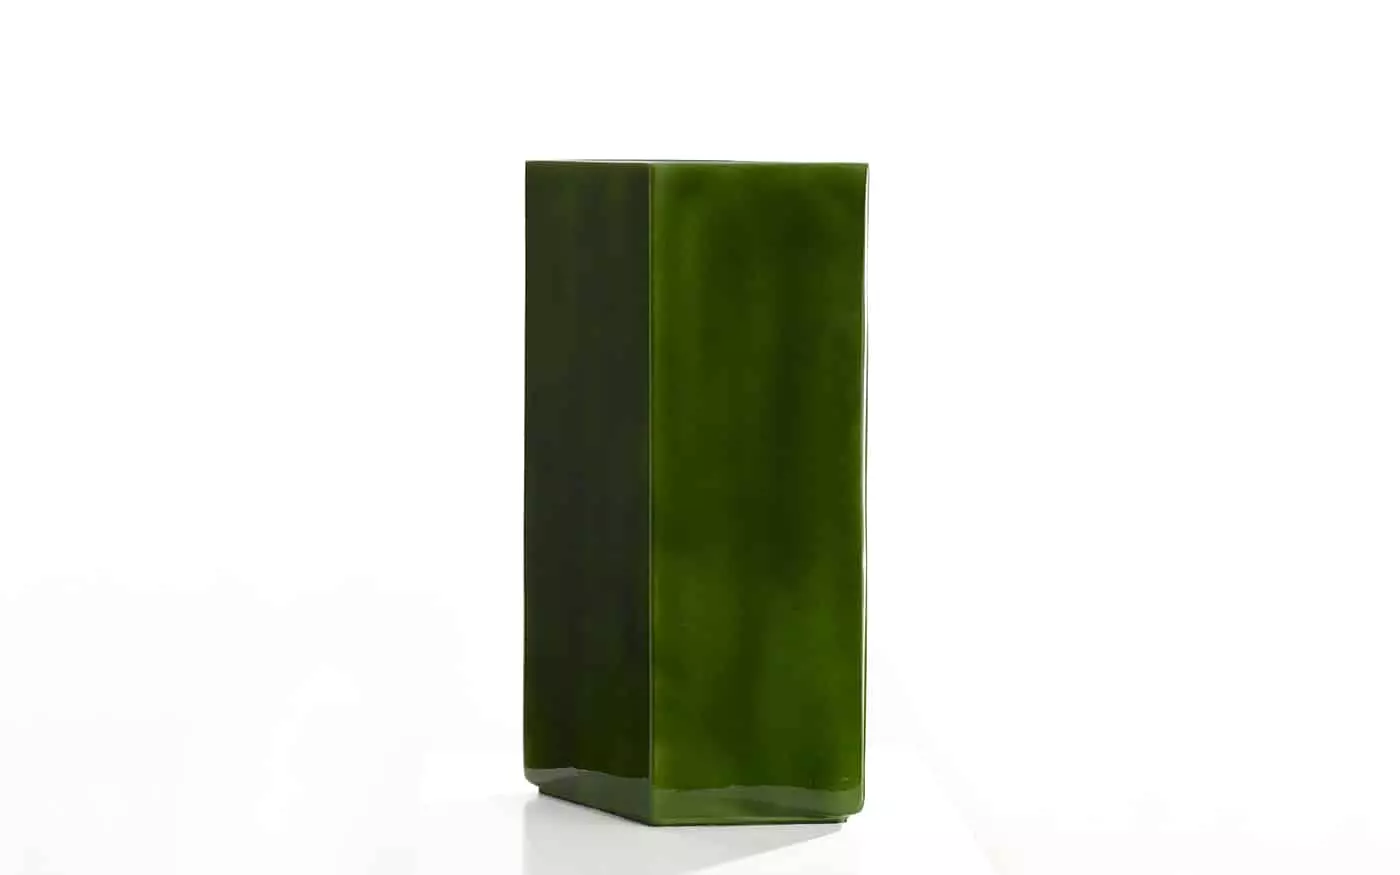 Vase Losange 84 green - Ronan & Erwan Bouroullec - Pendant light - Galerie kreo